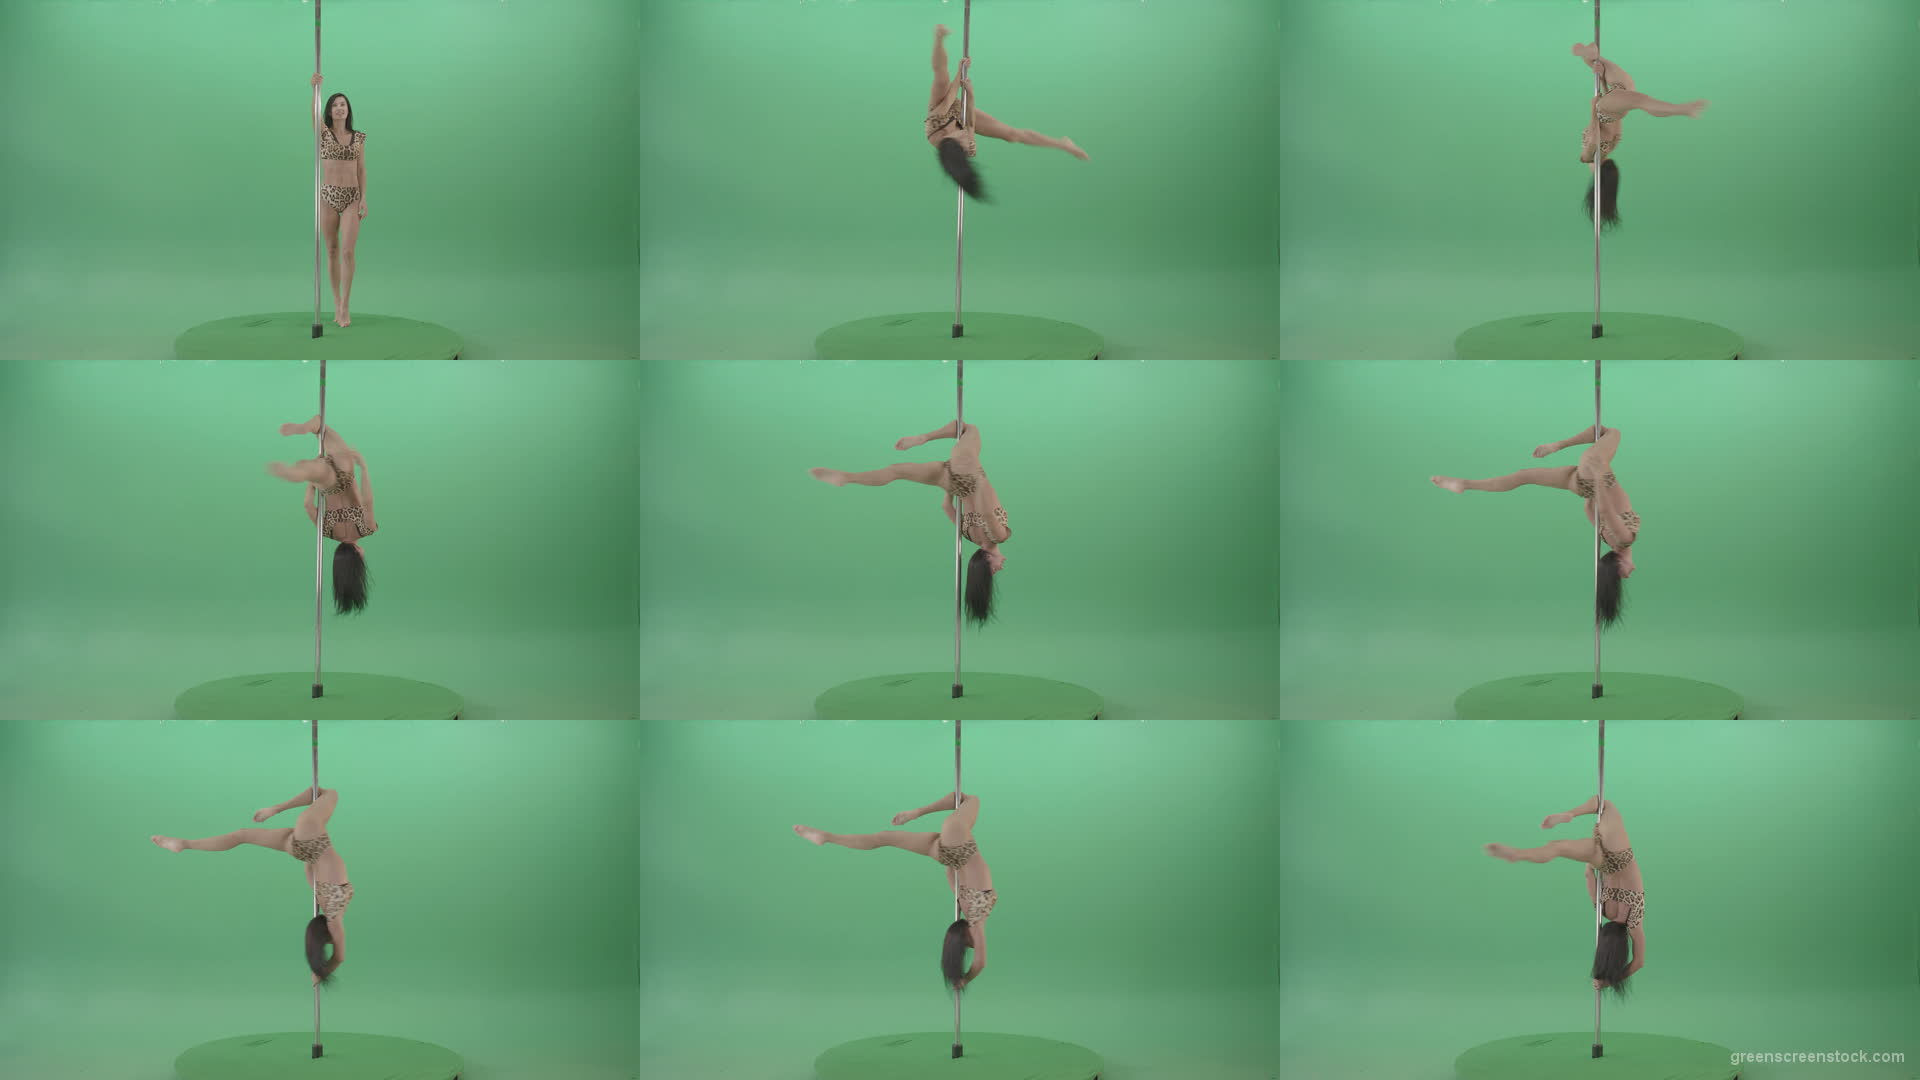 Woman-on-jaguar-skin-dress-spinning-slowly-on-pilon-making-pole-dance-on-green-screen-4K-Video-Footage-1920 Green Screen Stock